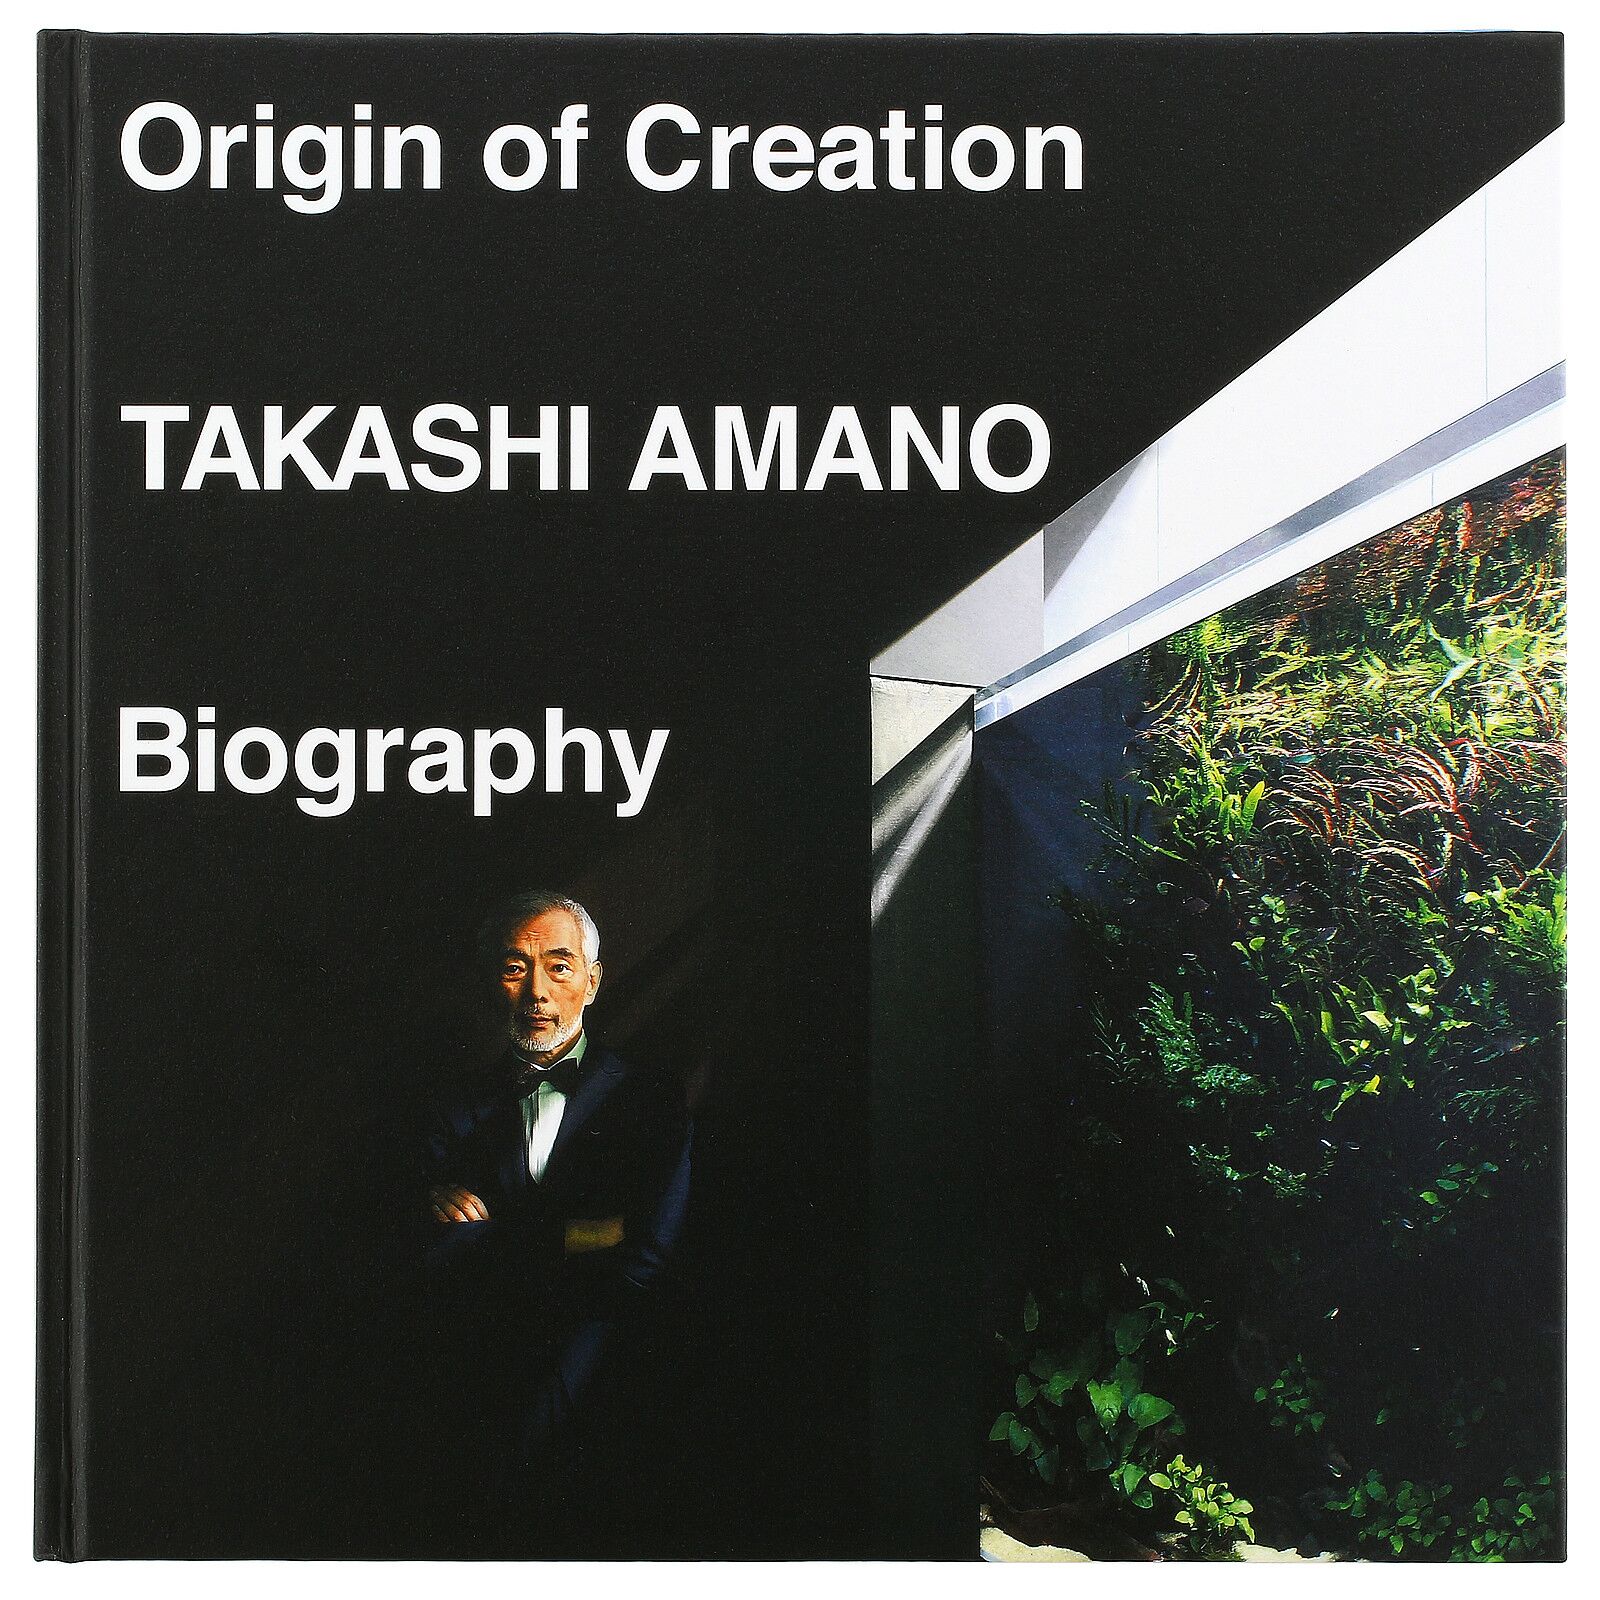 ADA - Takashi Amano Biography - Origin of Creation